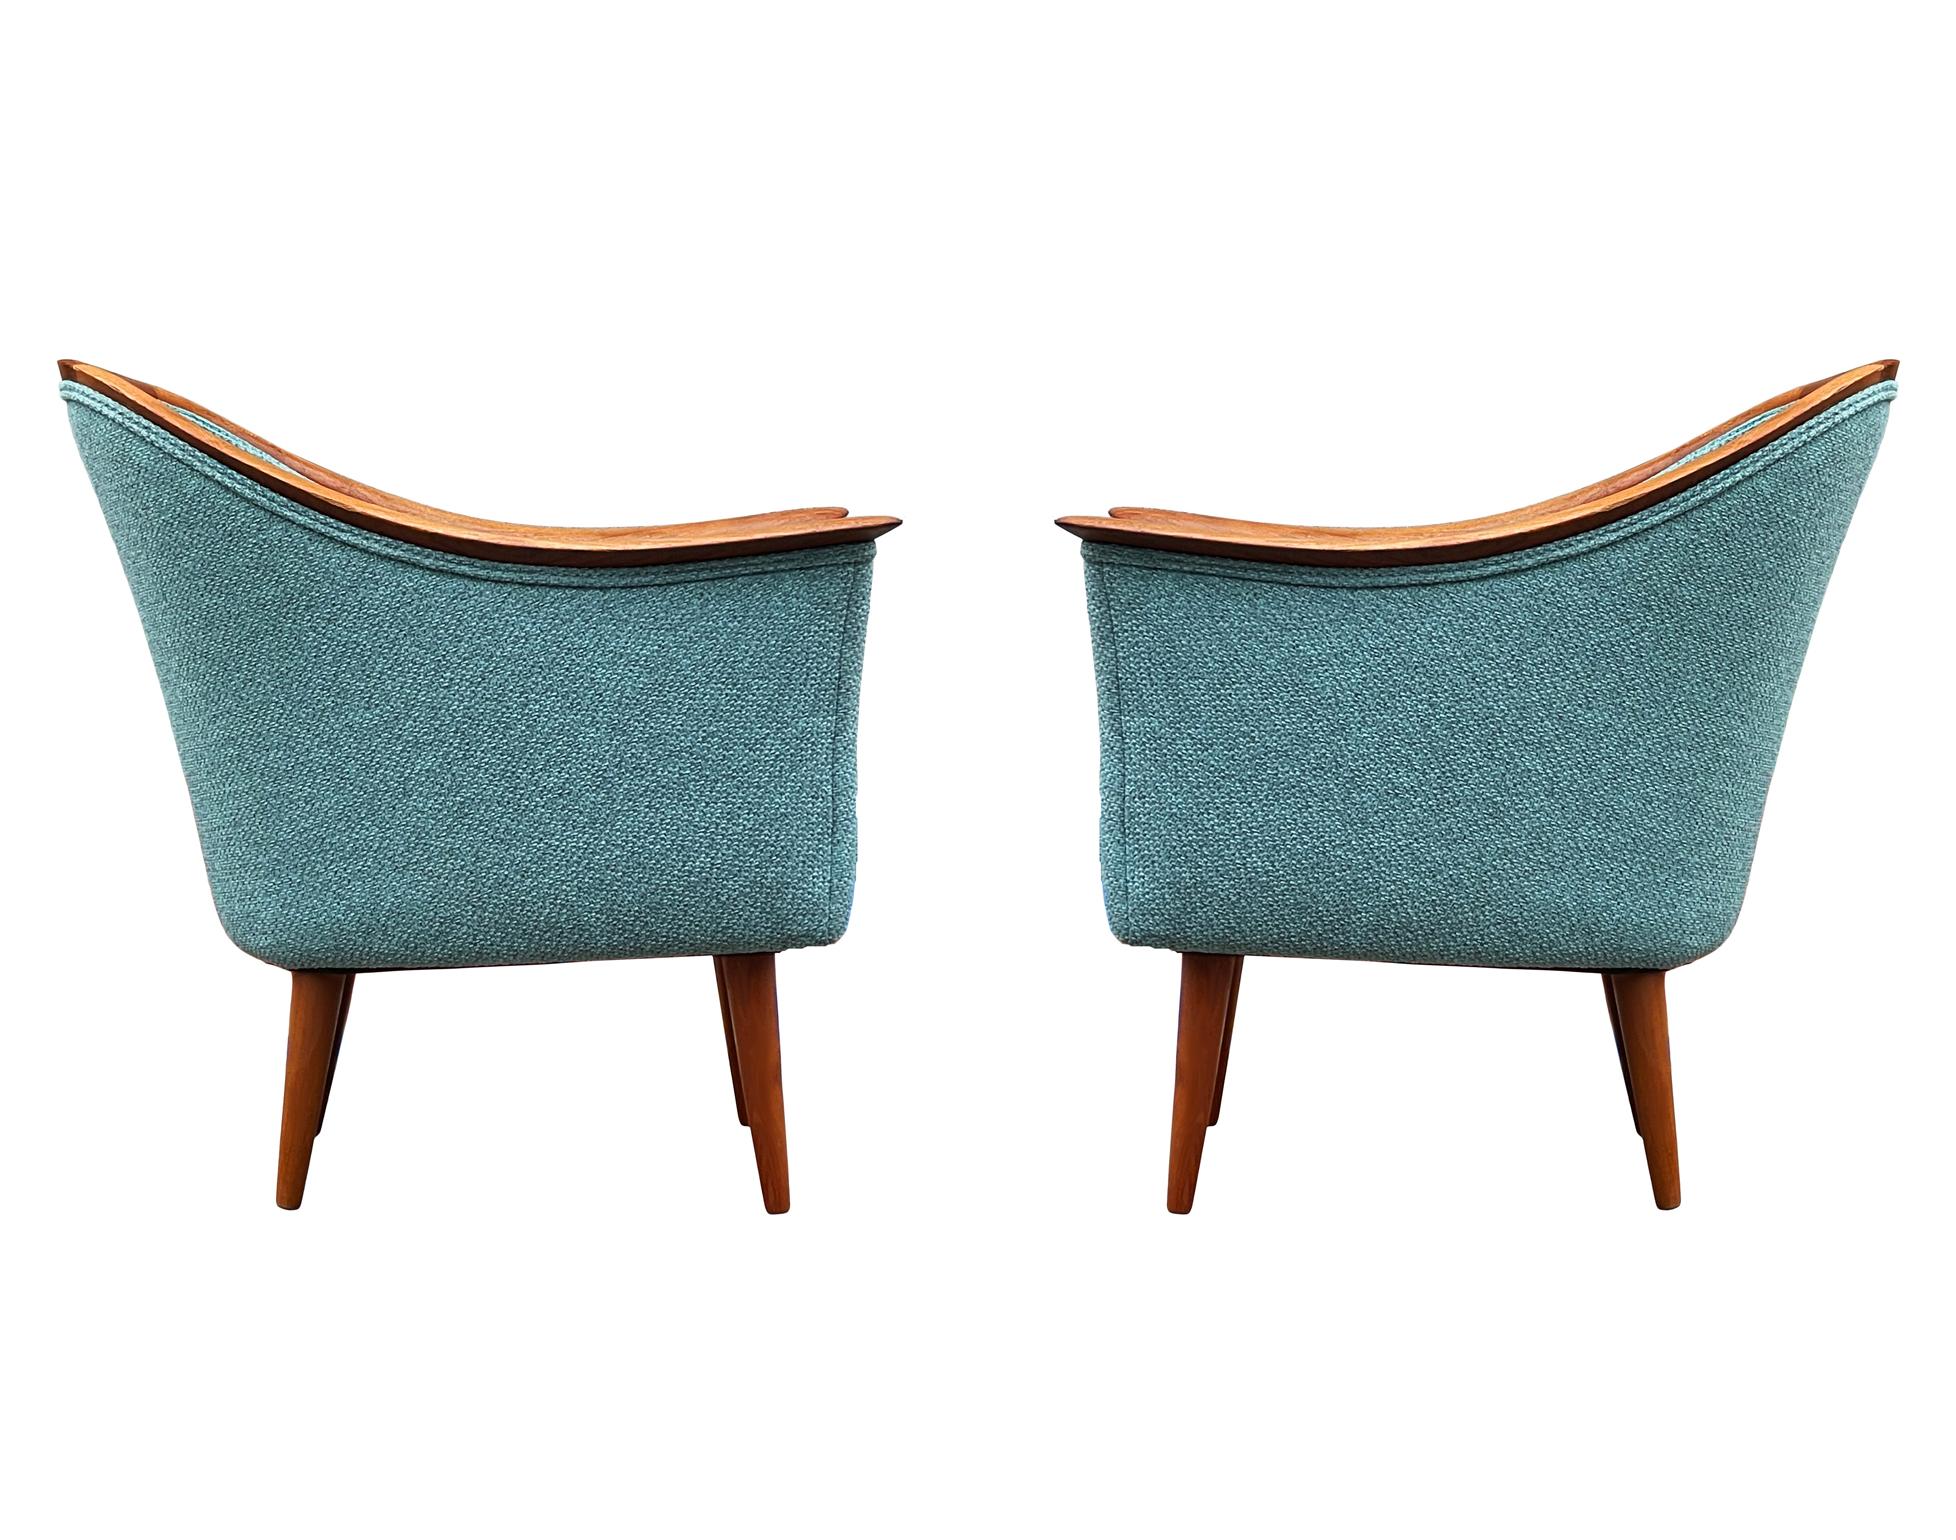 Matching Pair of Mid Century Danish Modern Lounge Chairs in Teak & Sage Tweed For Sale 3